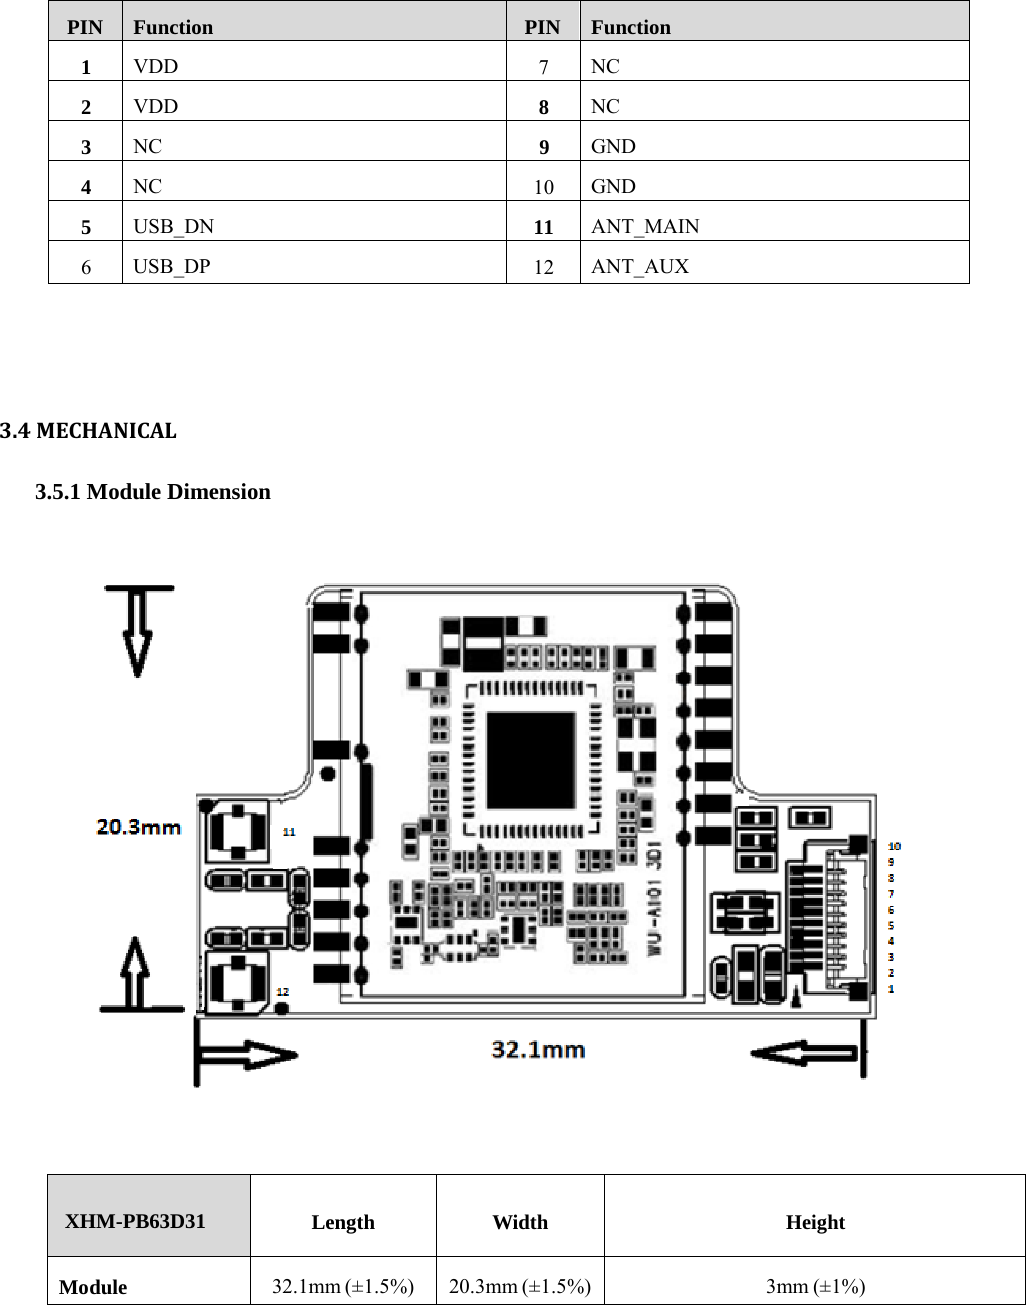 PIN Function PIN Function 1 VDD  7  NC 2 VDD 8 NC 3 NC 9 GND 4 NC  10  GND 5 USB_DN 11 ANT_MAIN 6  USB_DP  12  ANT_AUX 3.4MECHANICAL3.5.1 Module Dimension   XHM-PB63D31 Length Width Height Module 32.1mm (±1.5%) 20.3mm (±1.5%) 3mm (±1%) 